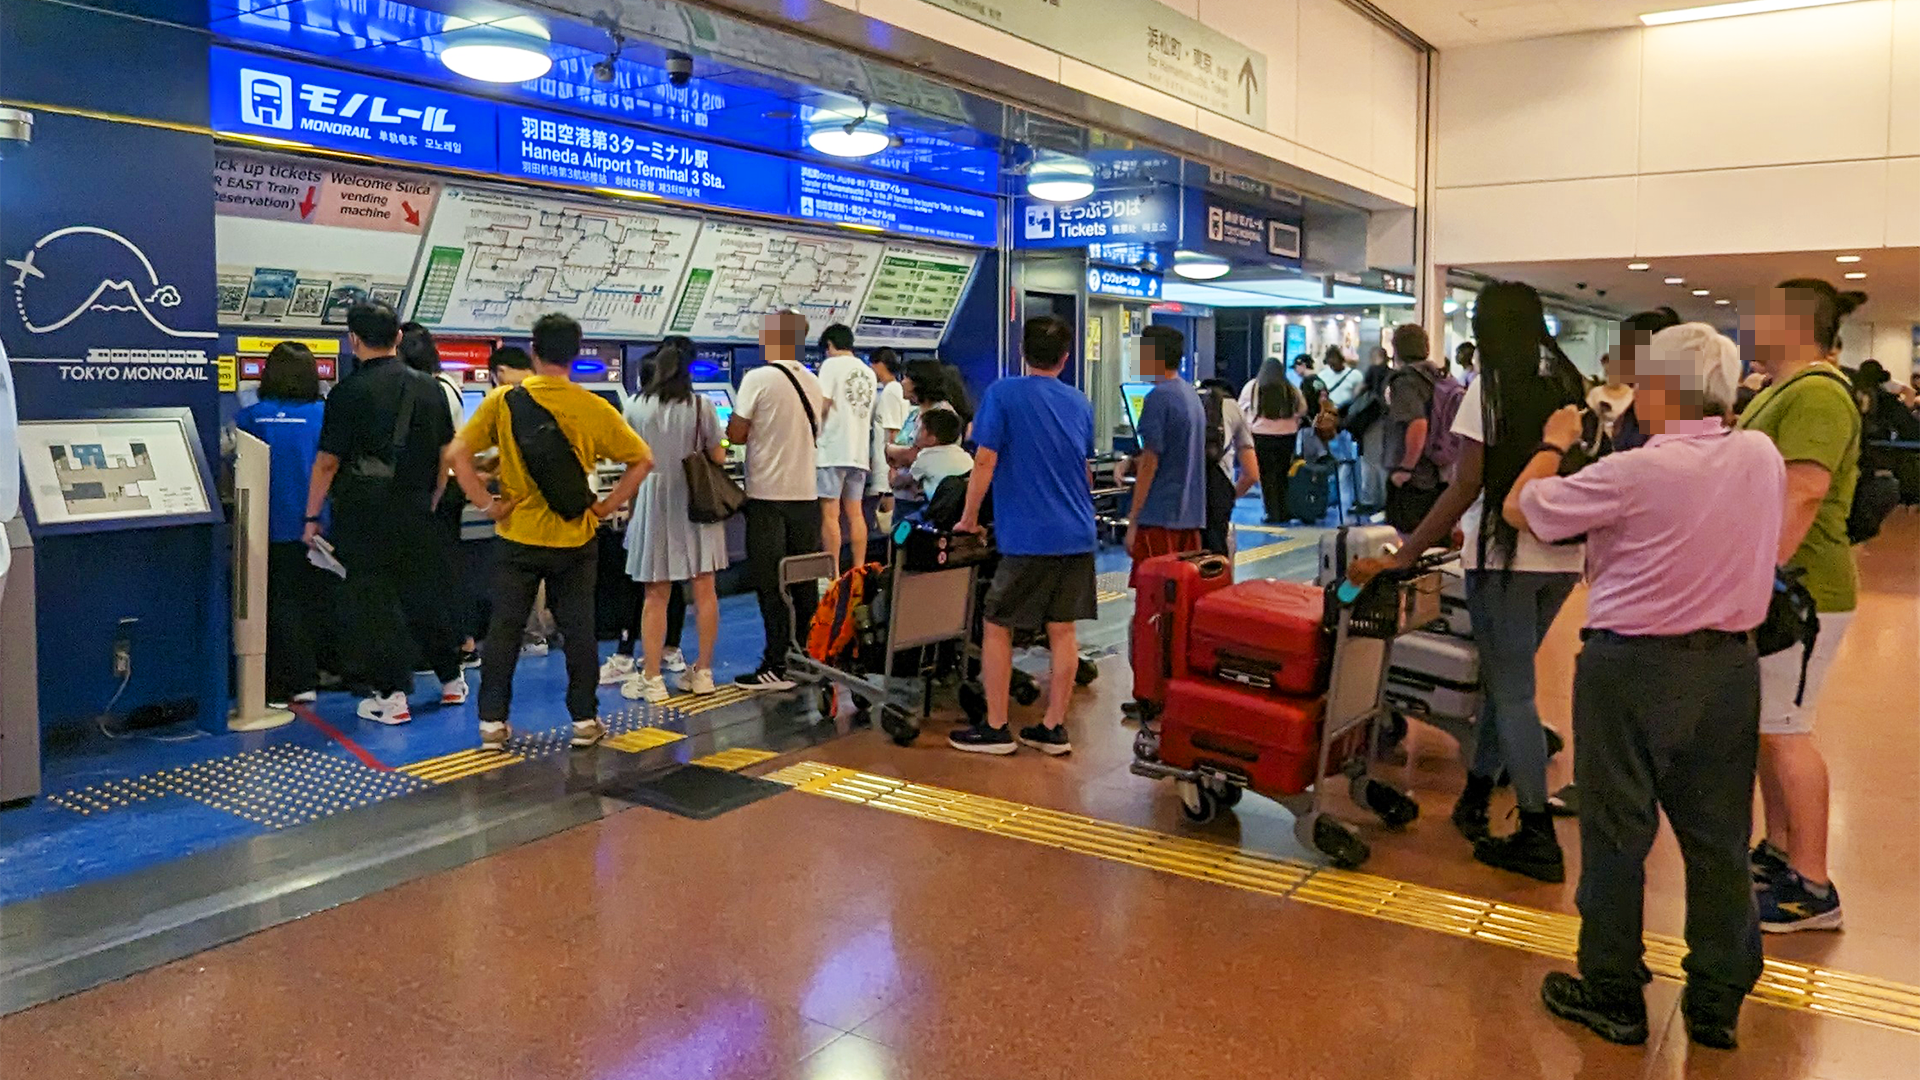 Tokyo Monorail Station (2F): Vending Machine at Haneda Airport Terminal 3